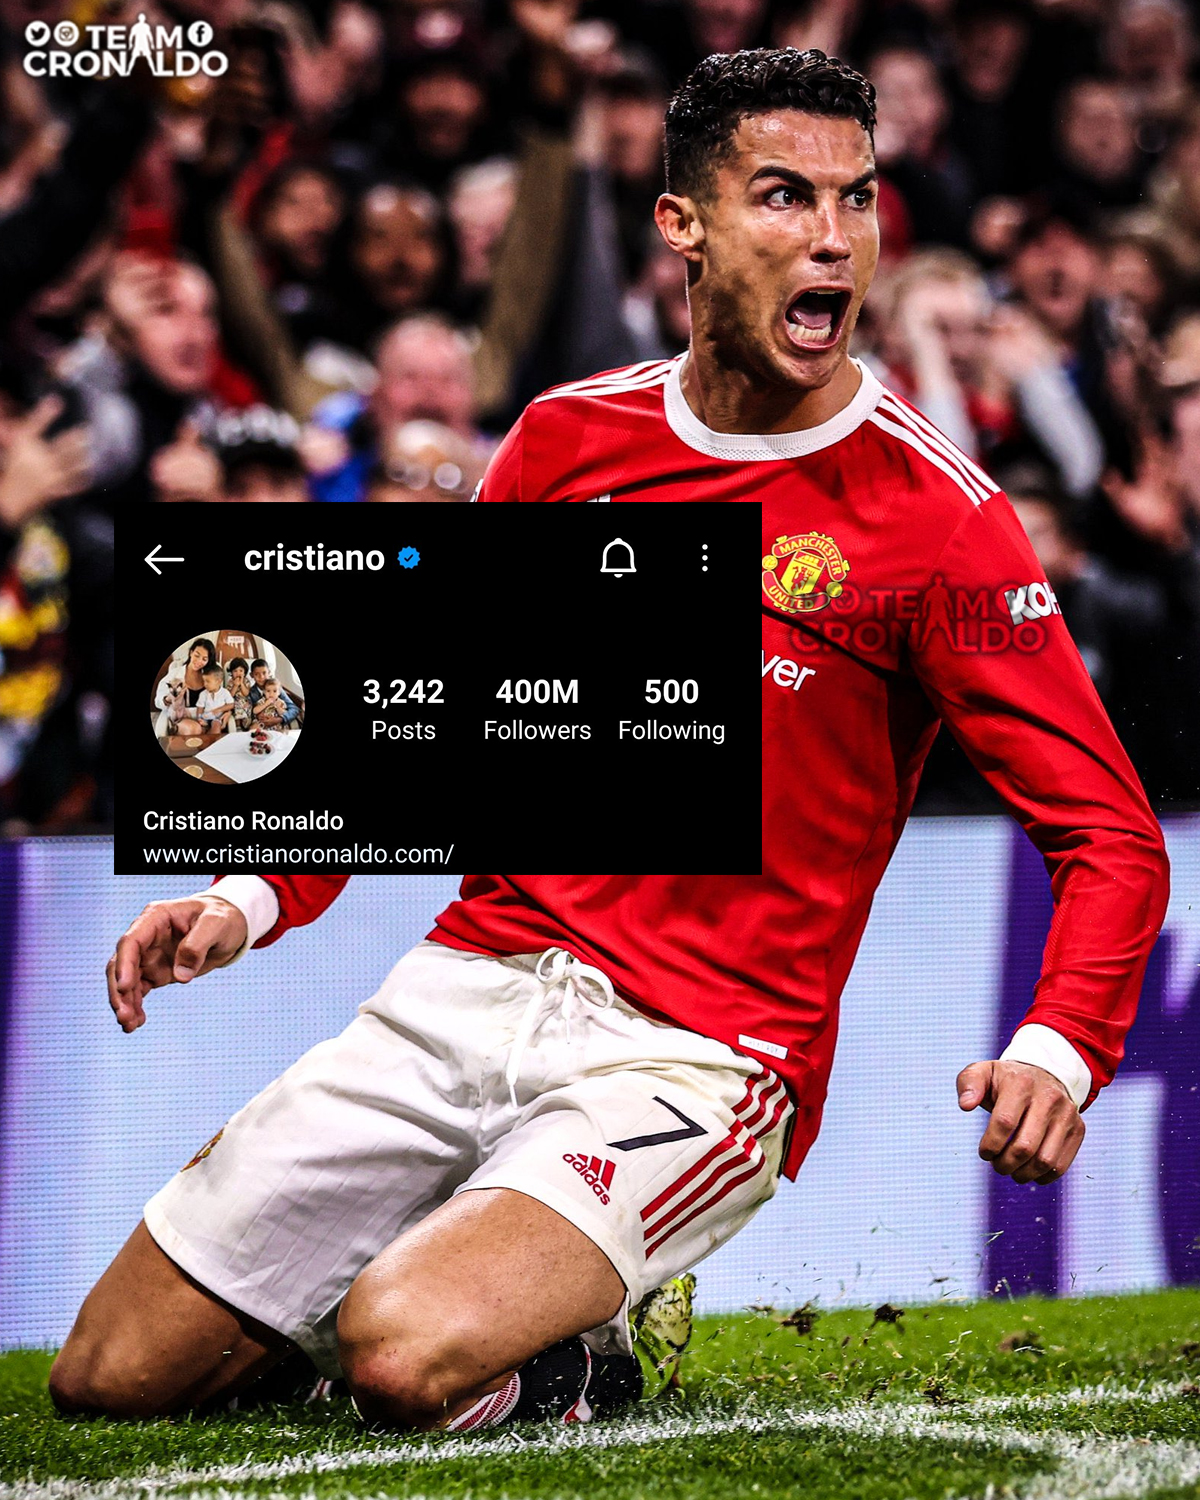 Cristiano Ronaldo has over 500 million followers on Instagram